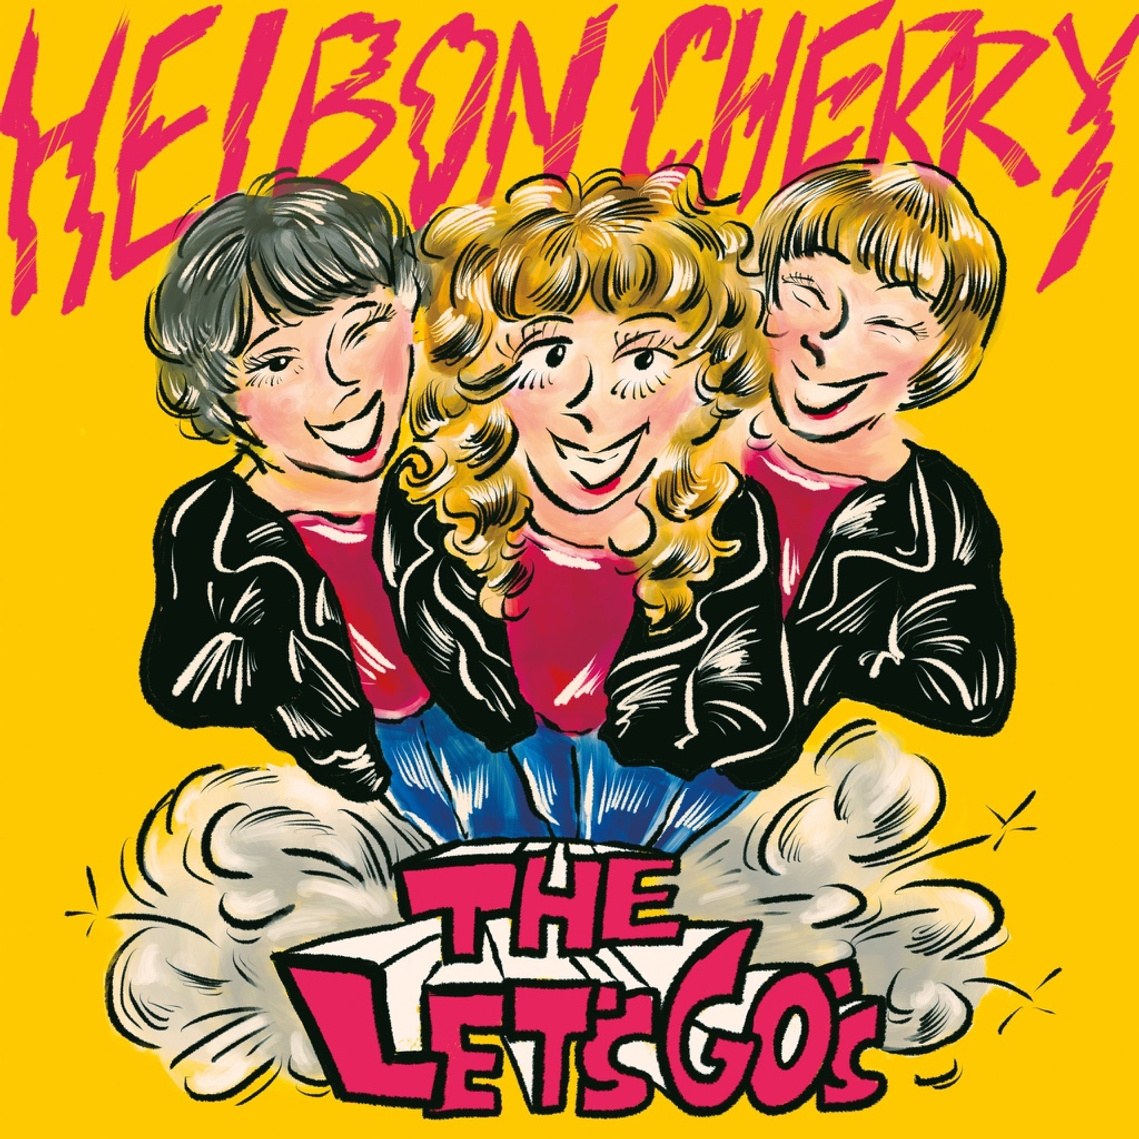 THE LET'S GO's/ HEIBON CHERRY (LP)
ドイツのレーベルSoundflatから2019年にリリースされた、THE LET'S GO's のLPジャケットのイラストを担当しました。

2019年1月